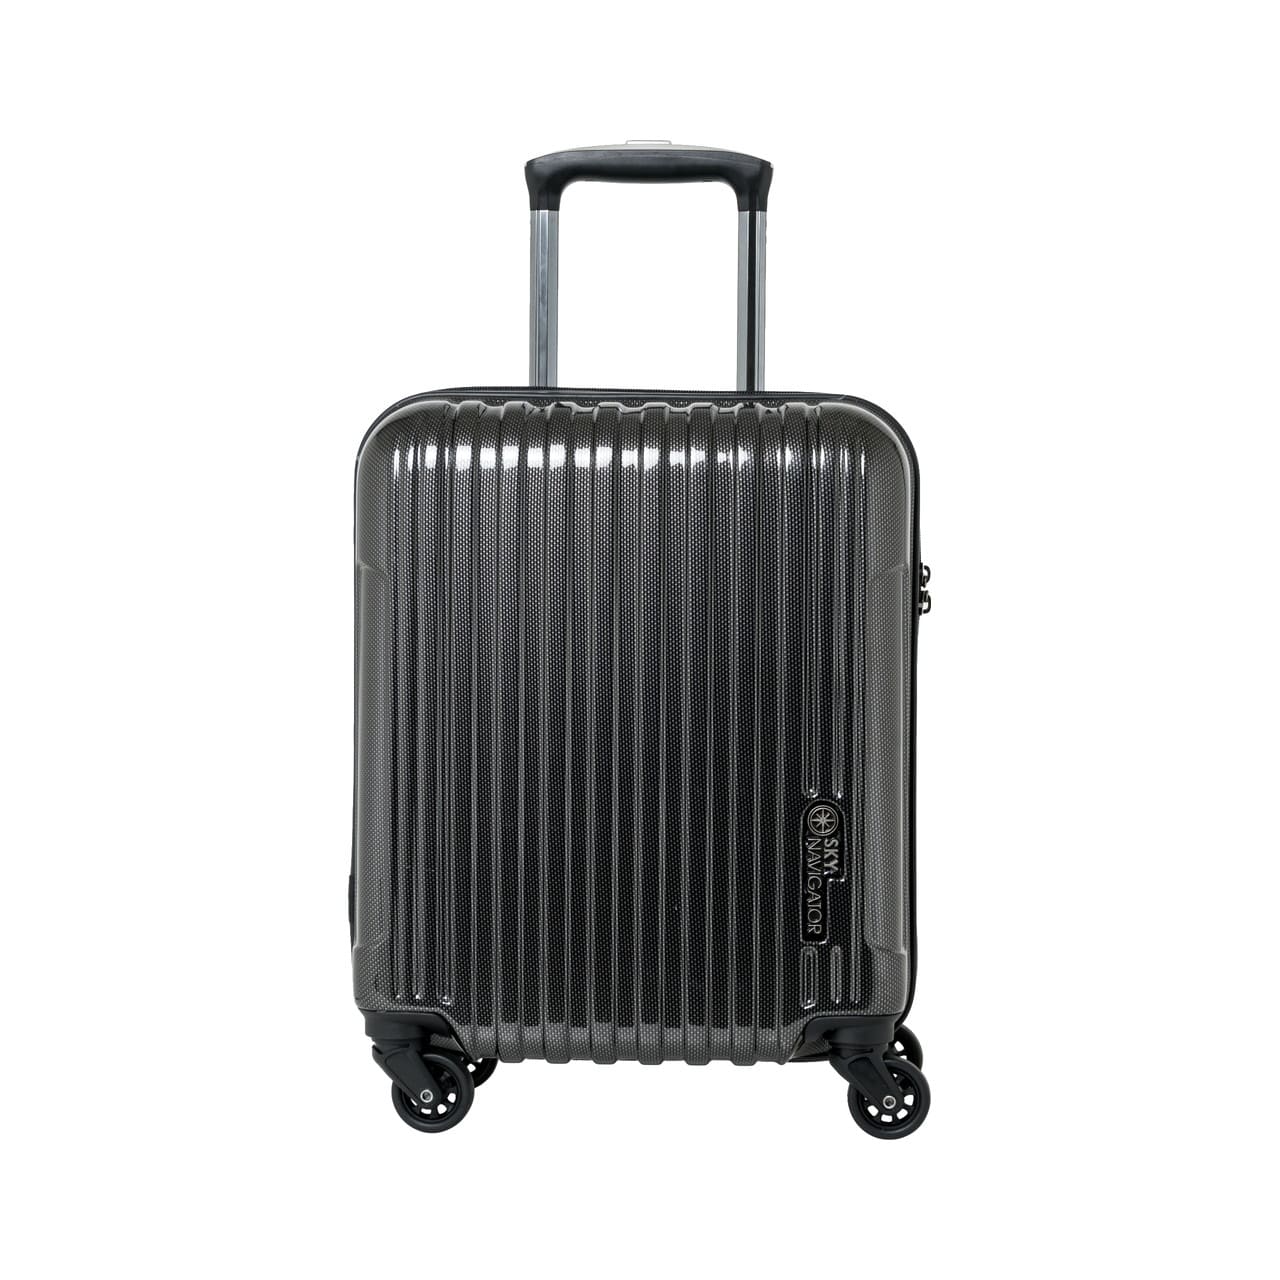 SKYNAVIGATORのスーツケースSK-0722-41のブラックカーボンの正面画像